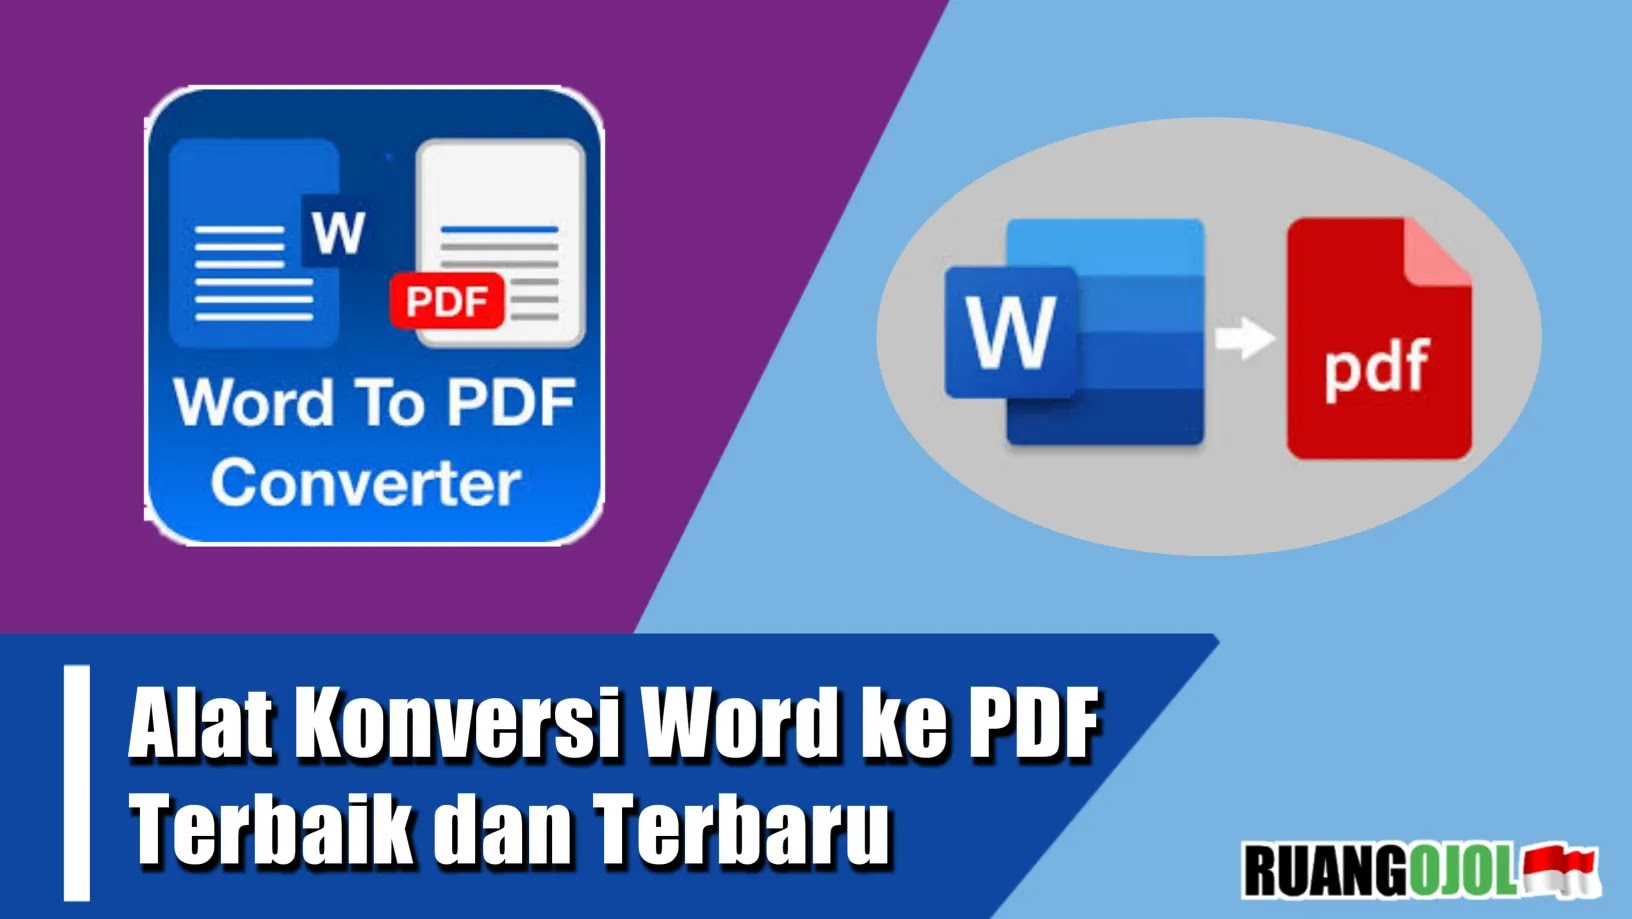 Alat Konversi Word ke PDF